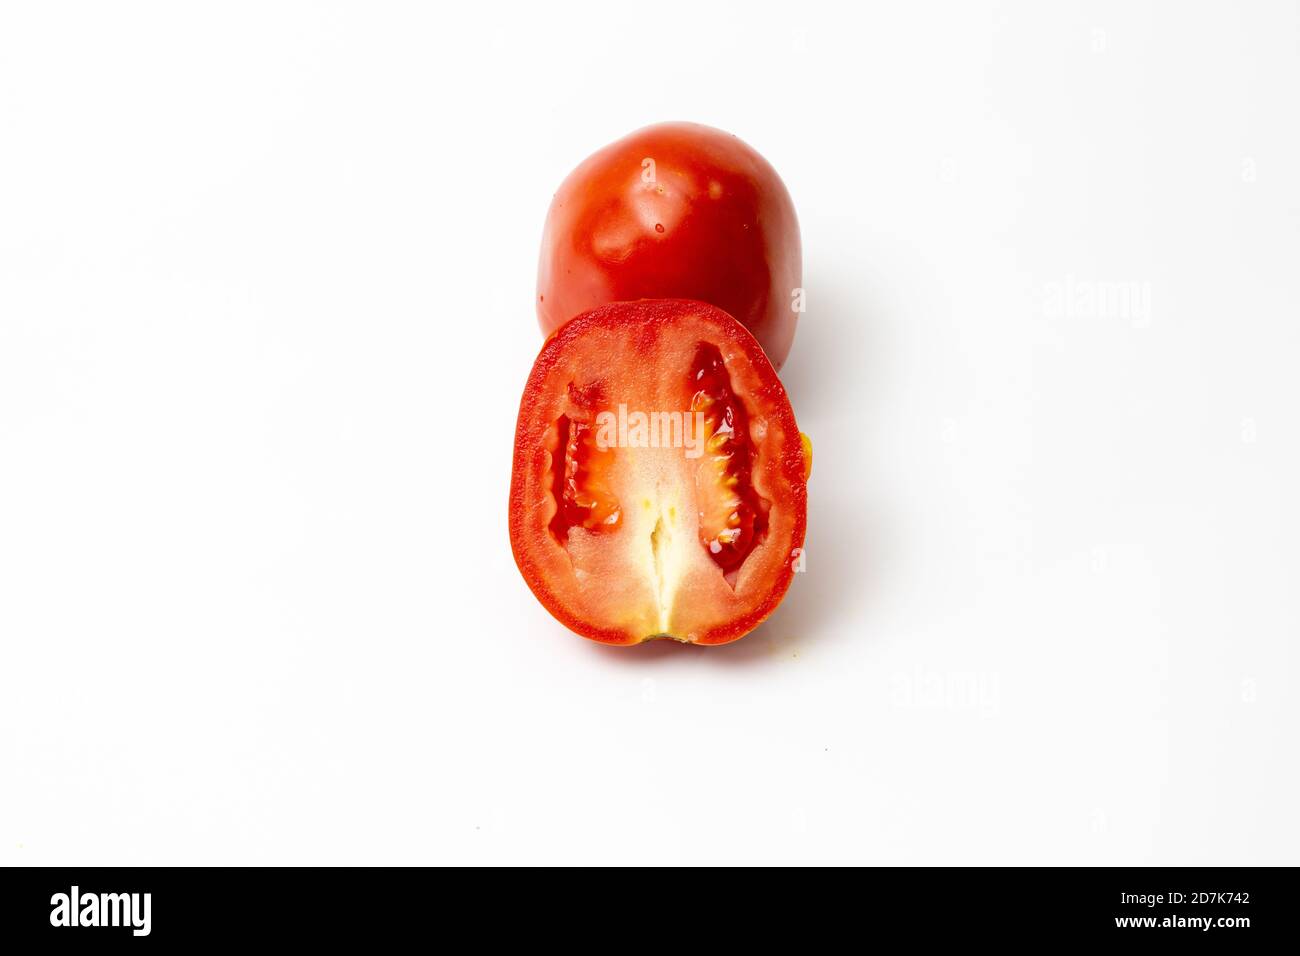 Isolated fresh red tomato Stock Photo